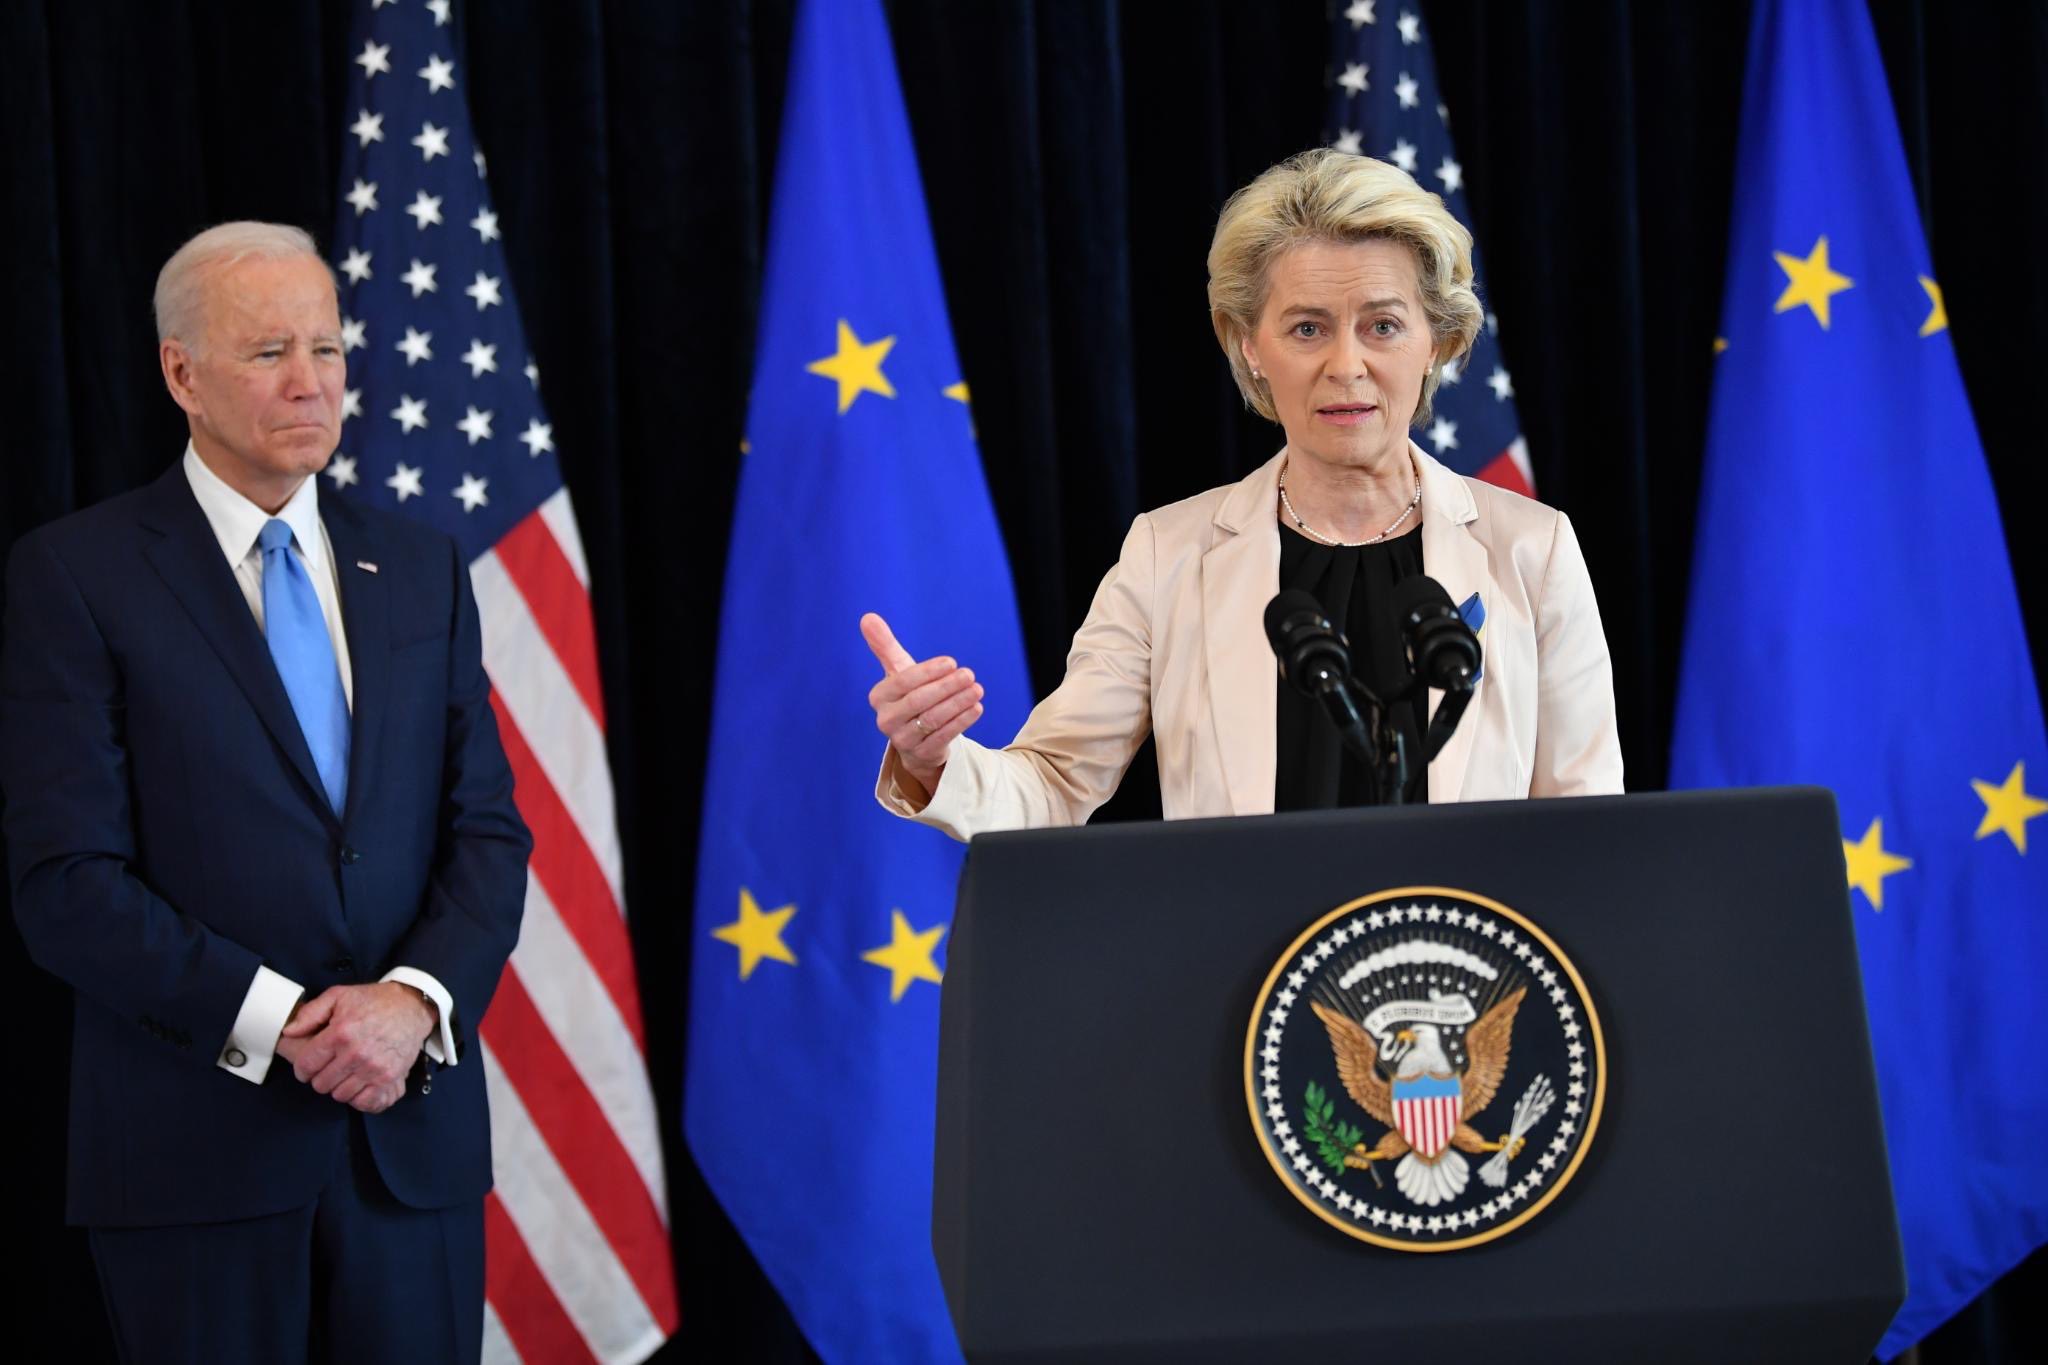 EC President Ursula von der Leyen and U.S. President Joe Biden - energy security